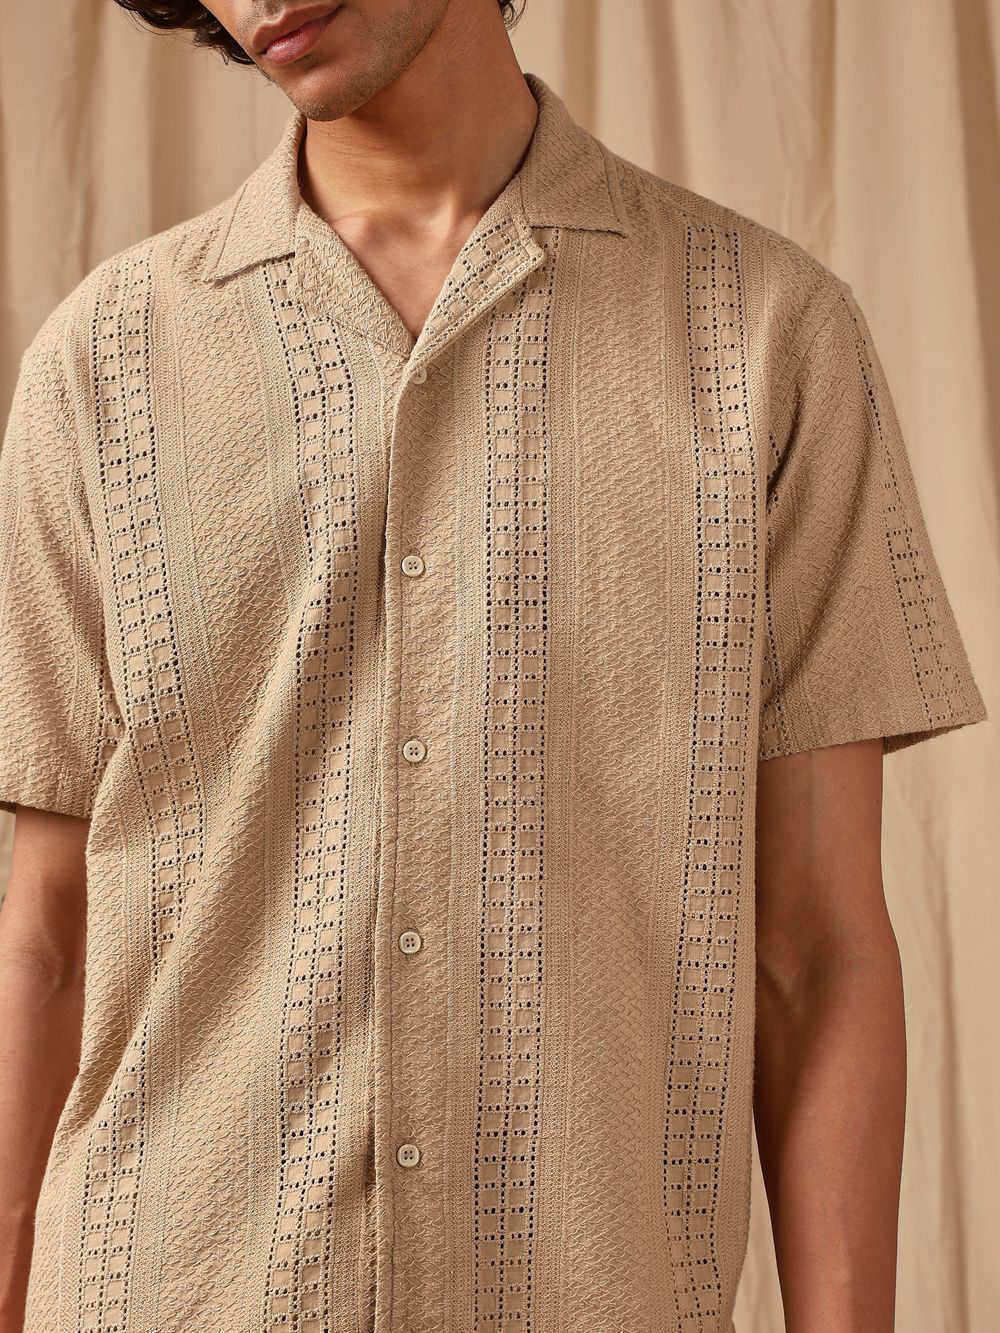 Light Khaki Embroidered Plain Loose Fit Casual Shirt